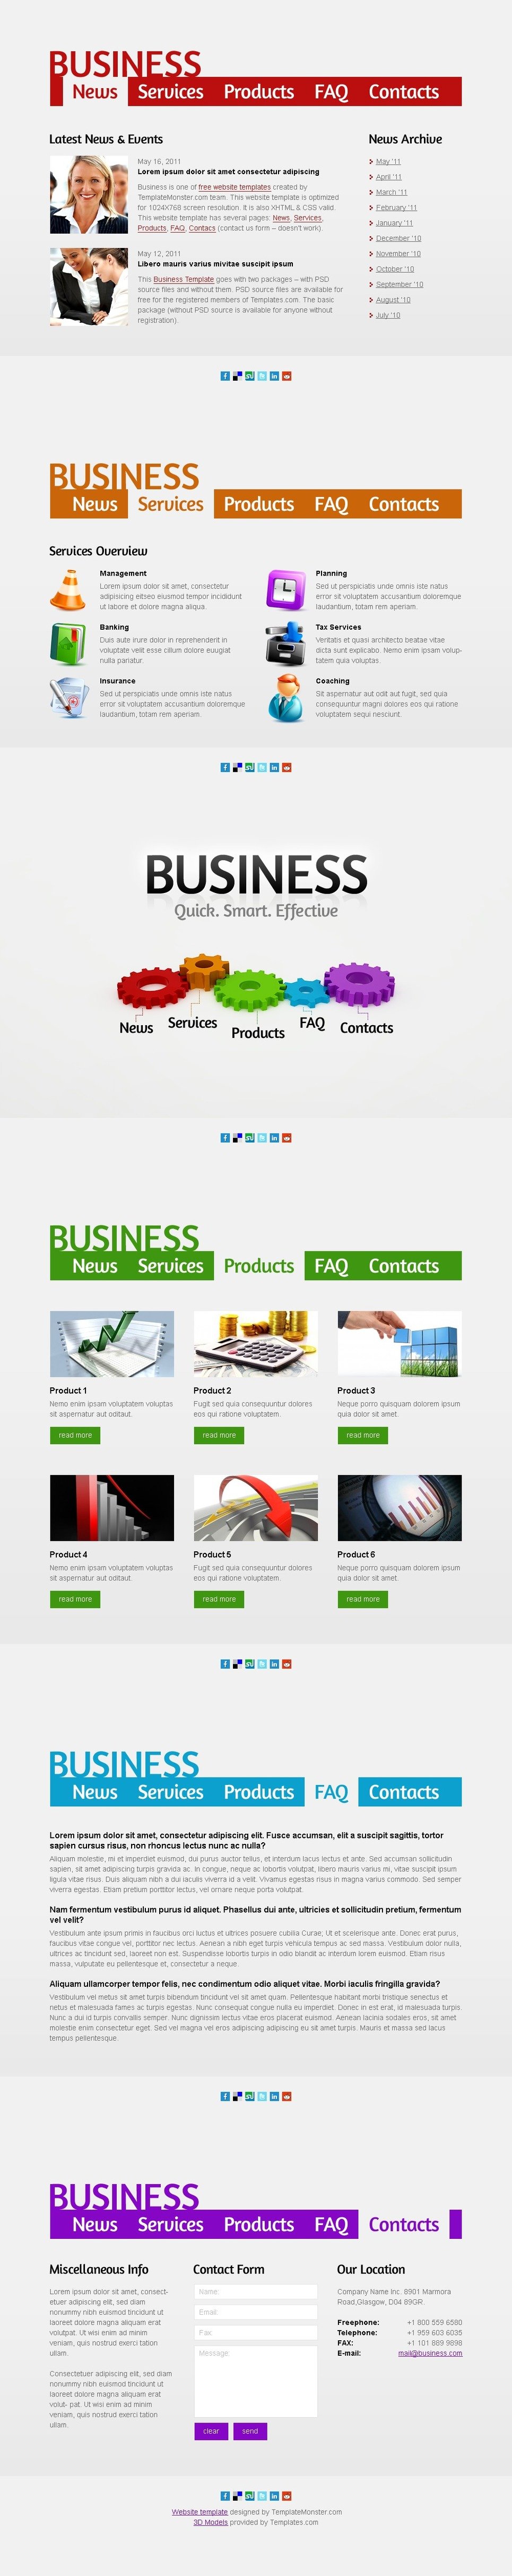 Free Business Web Template - Single Page Layout